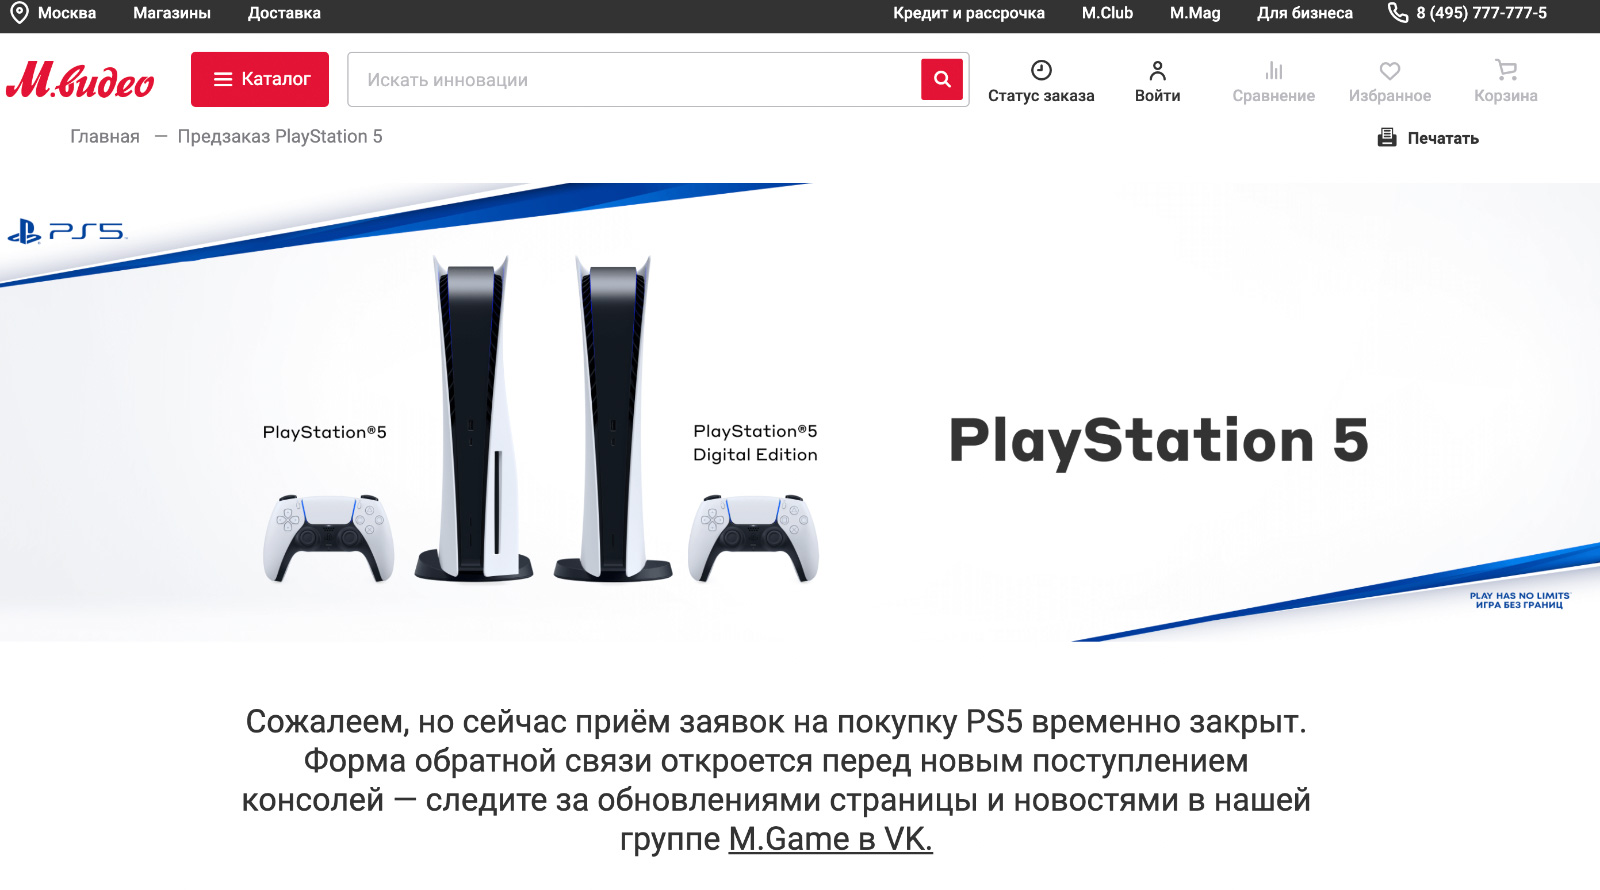 Playstation 5 покупки. Ps5 Мвидео. PLAYSTATION 5 предзаказ. ПС 5 Мвидео. М видео ps5.